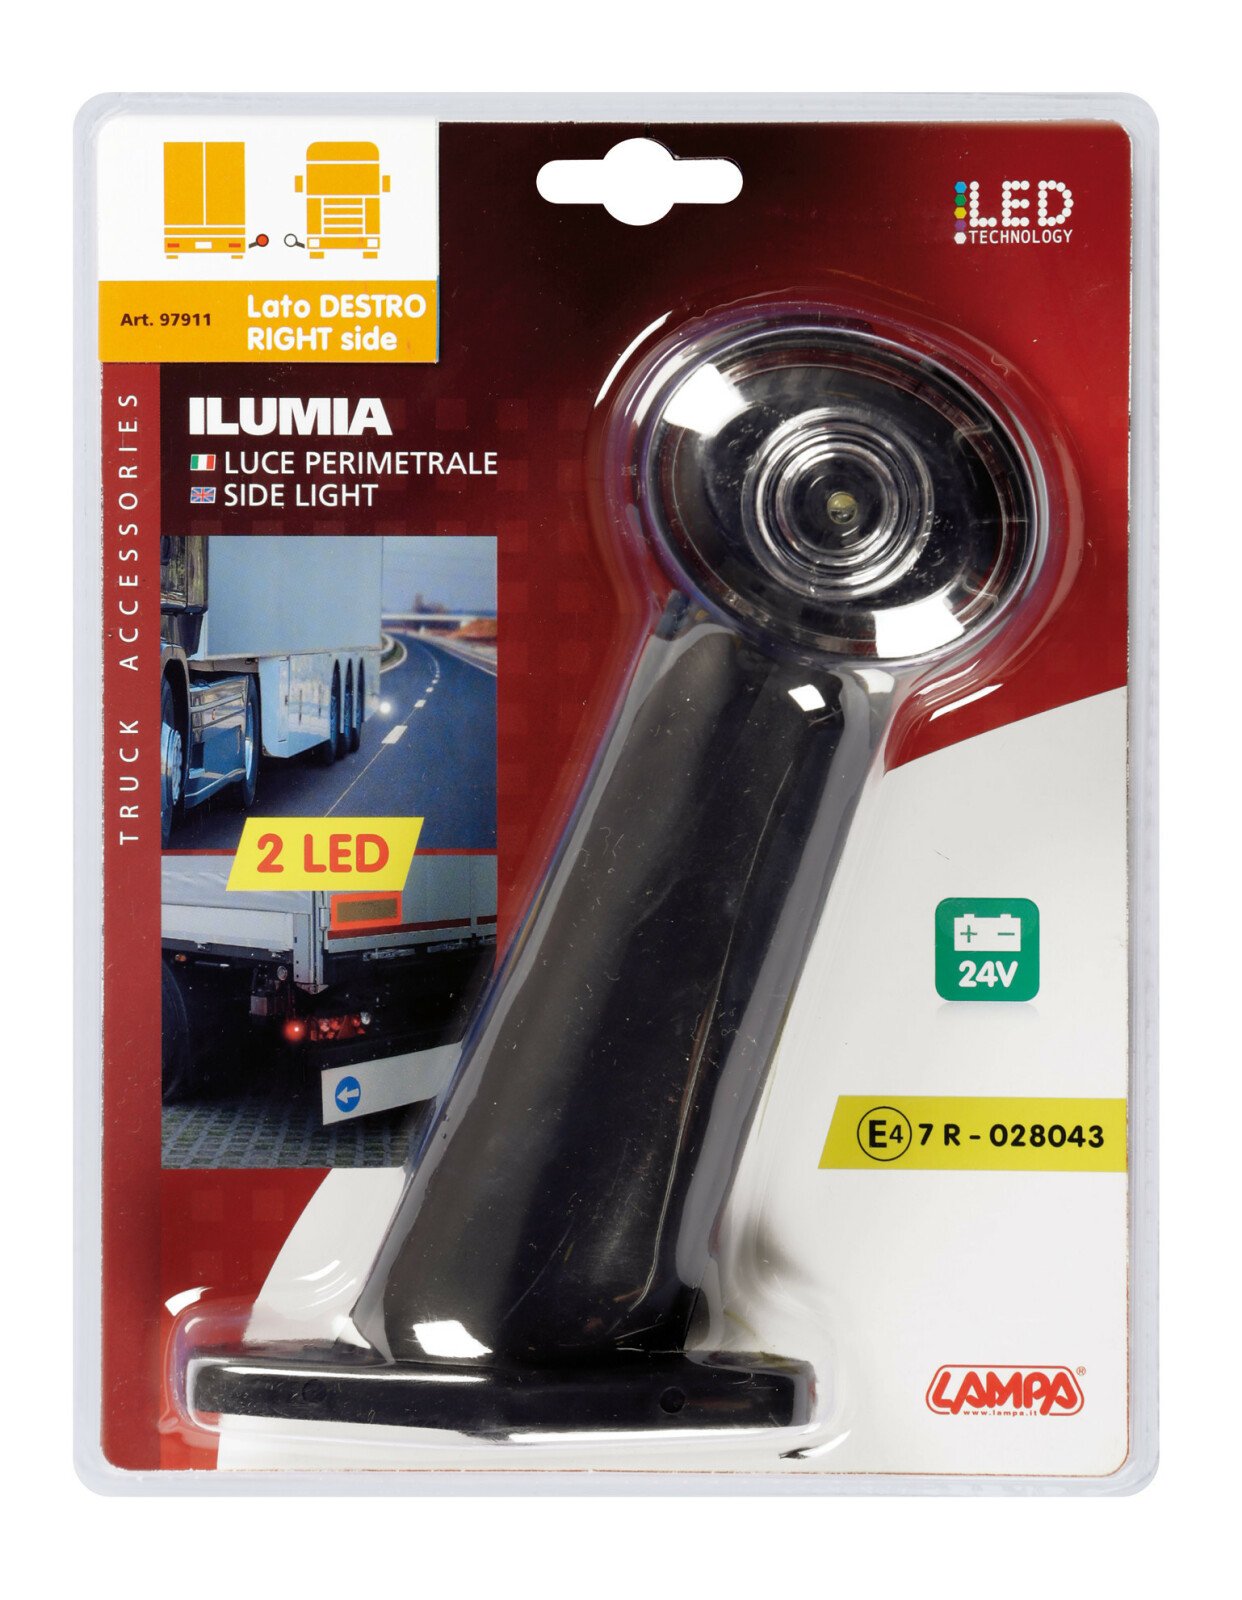 Ilumia, side light, 2 Led, 24V - 60° - Right thumb